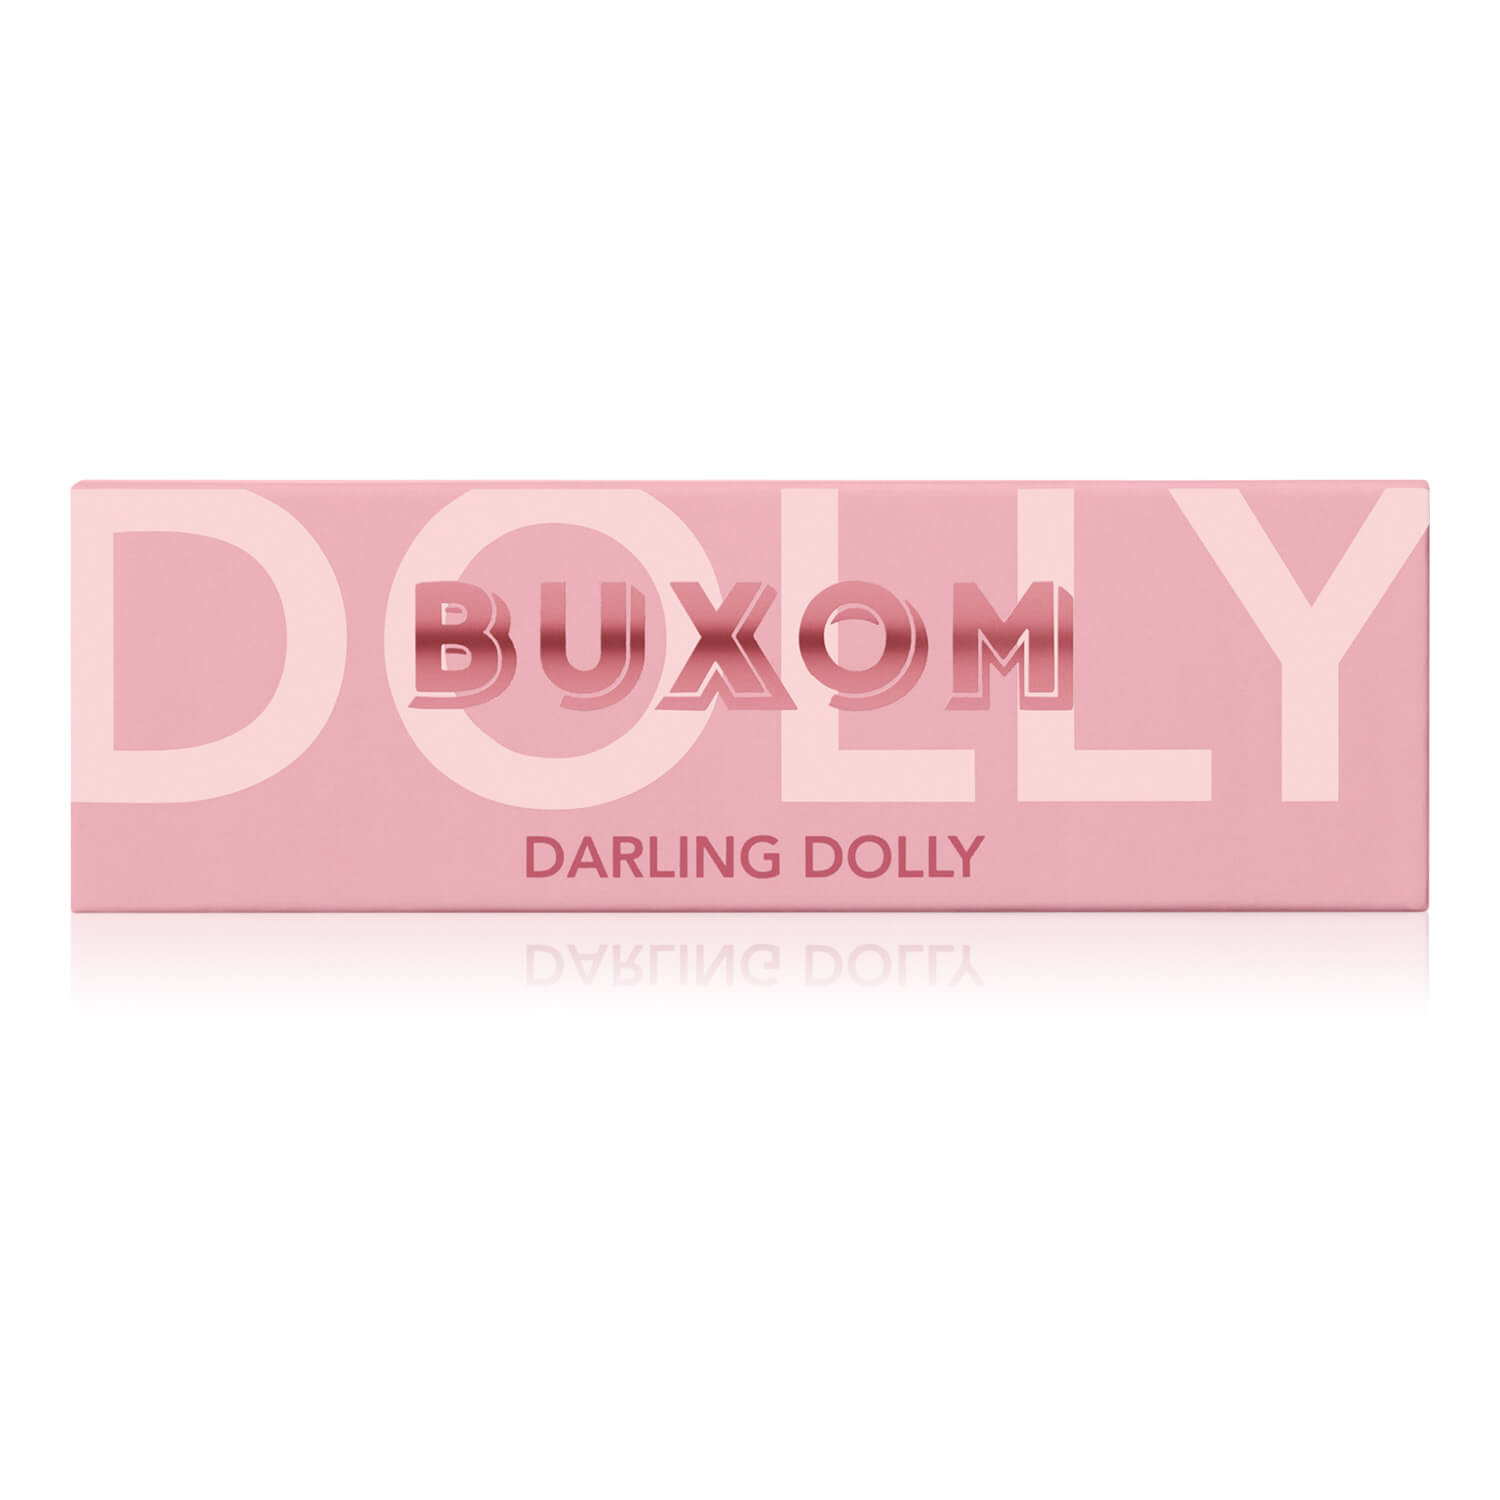 palette darling dolly eyeshadow (paleta de sombras para ojos)